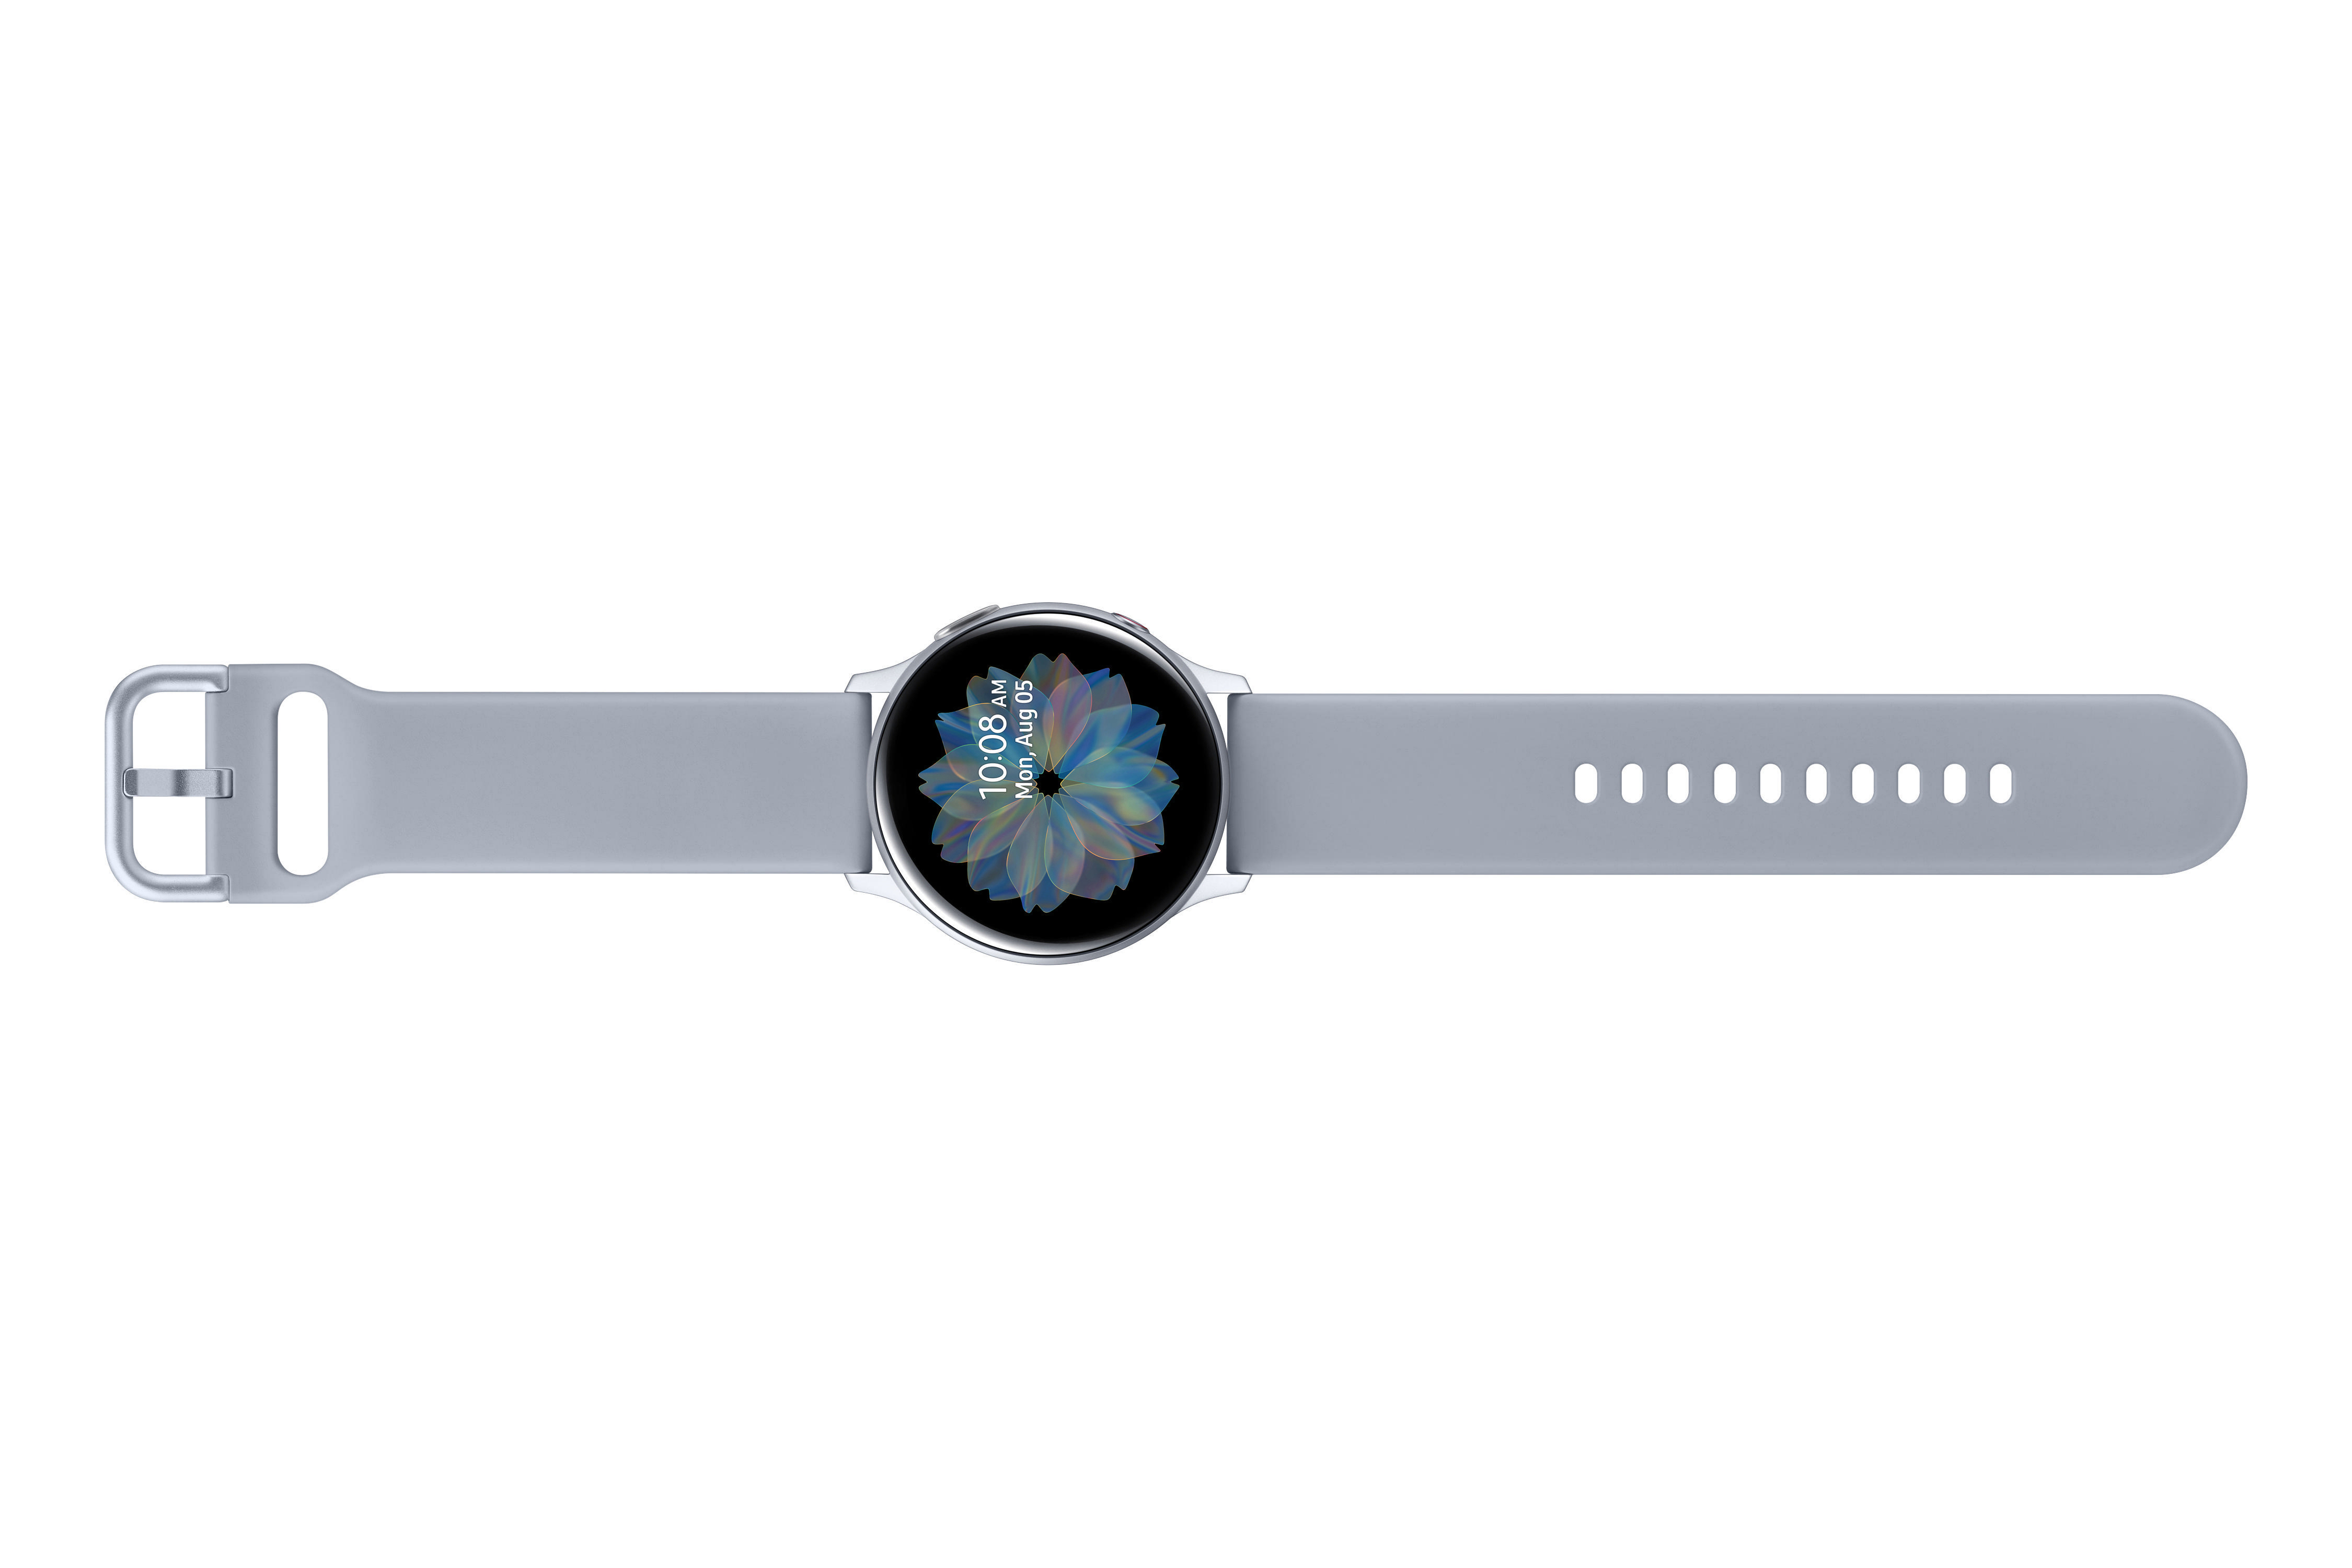 LTE Cloud S/M, Silver 40 Aluminium Watch SAMSUNG mm Fluorkautschuk-Armband, Active2 Galaxy Smartwatch